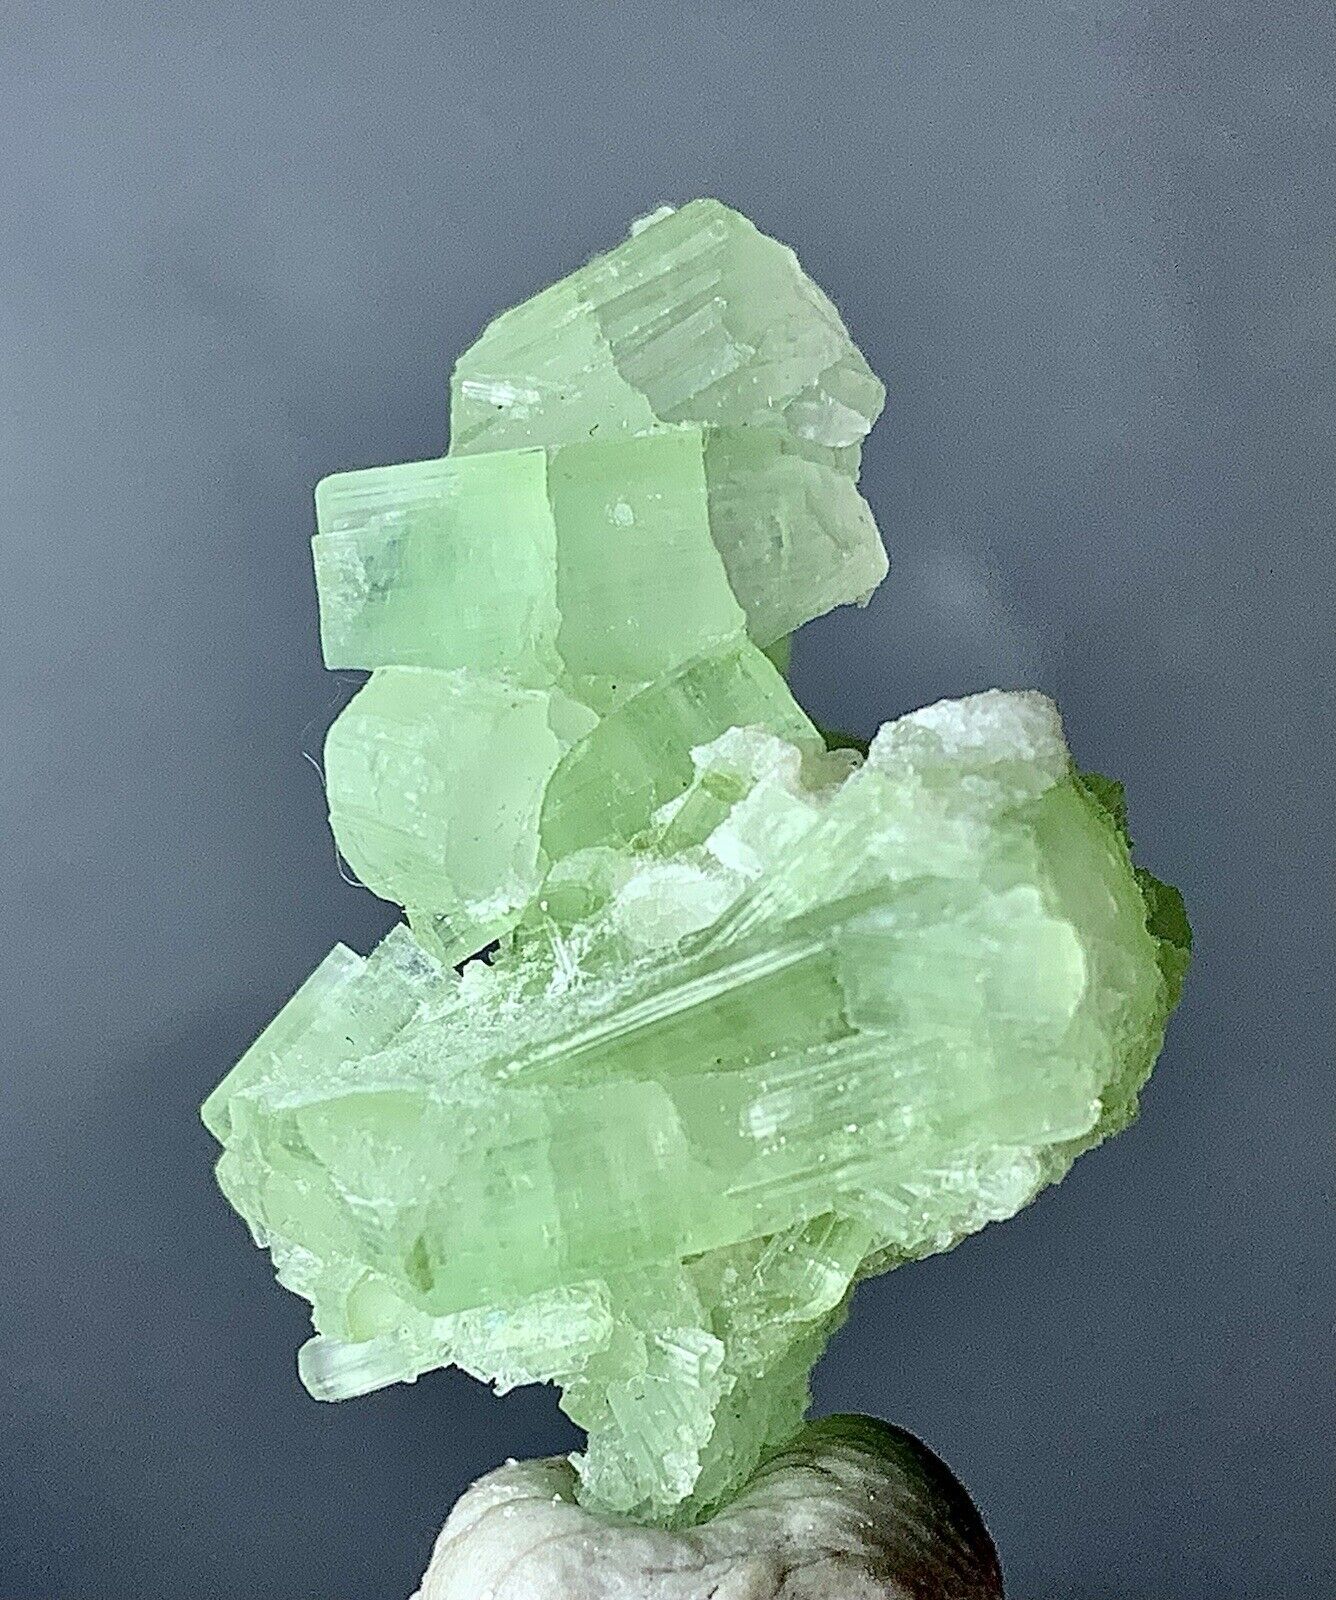 44 Carat Tourmaline Crystal Specimen From Afghanistan